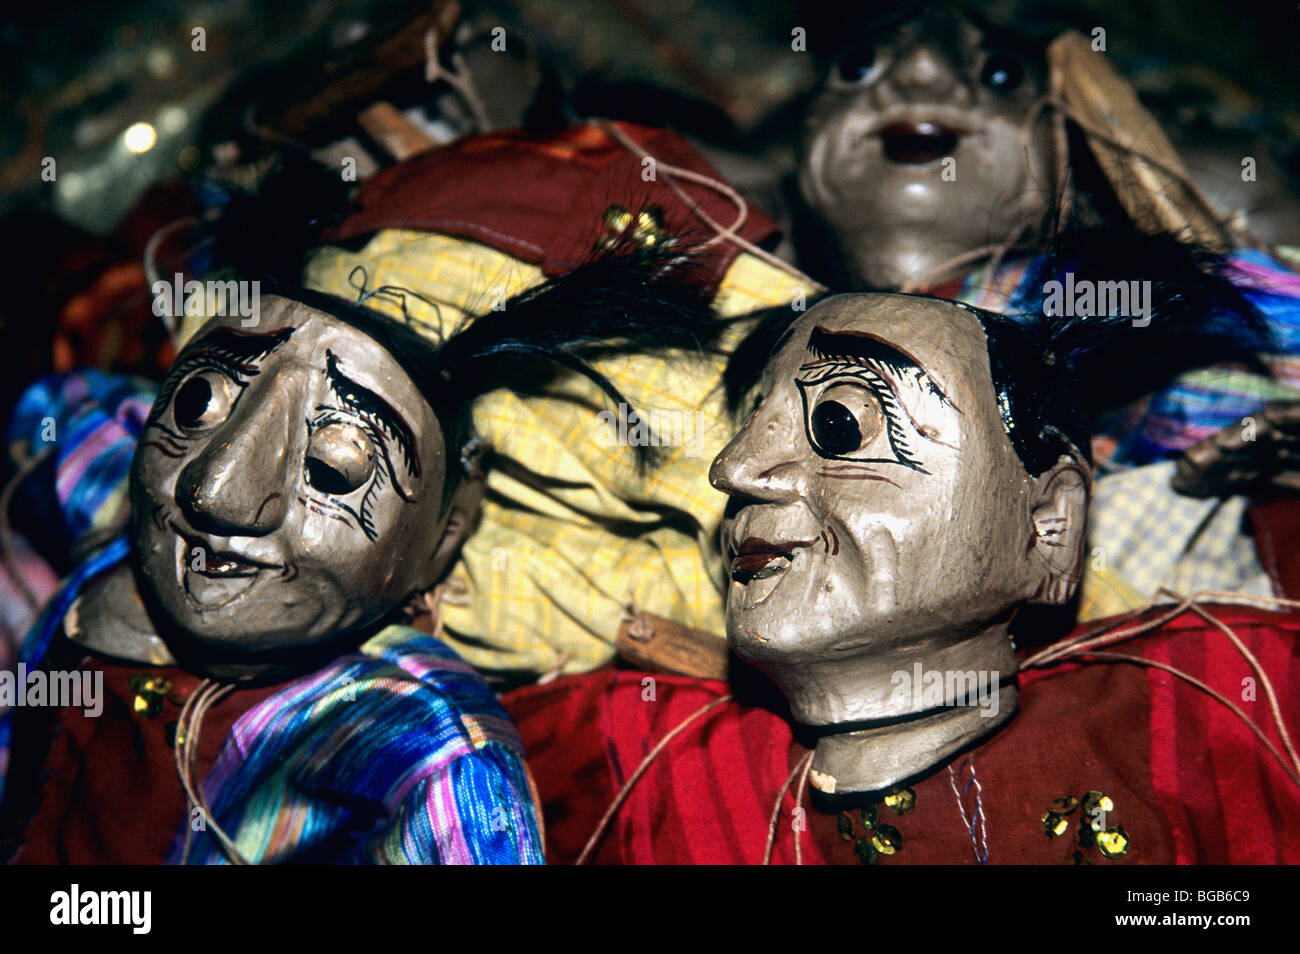 Marionette faces, Myanmar. Stock Photo